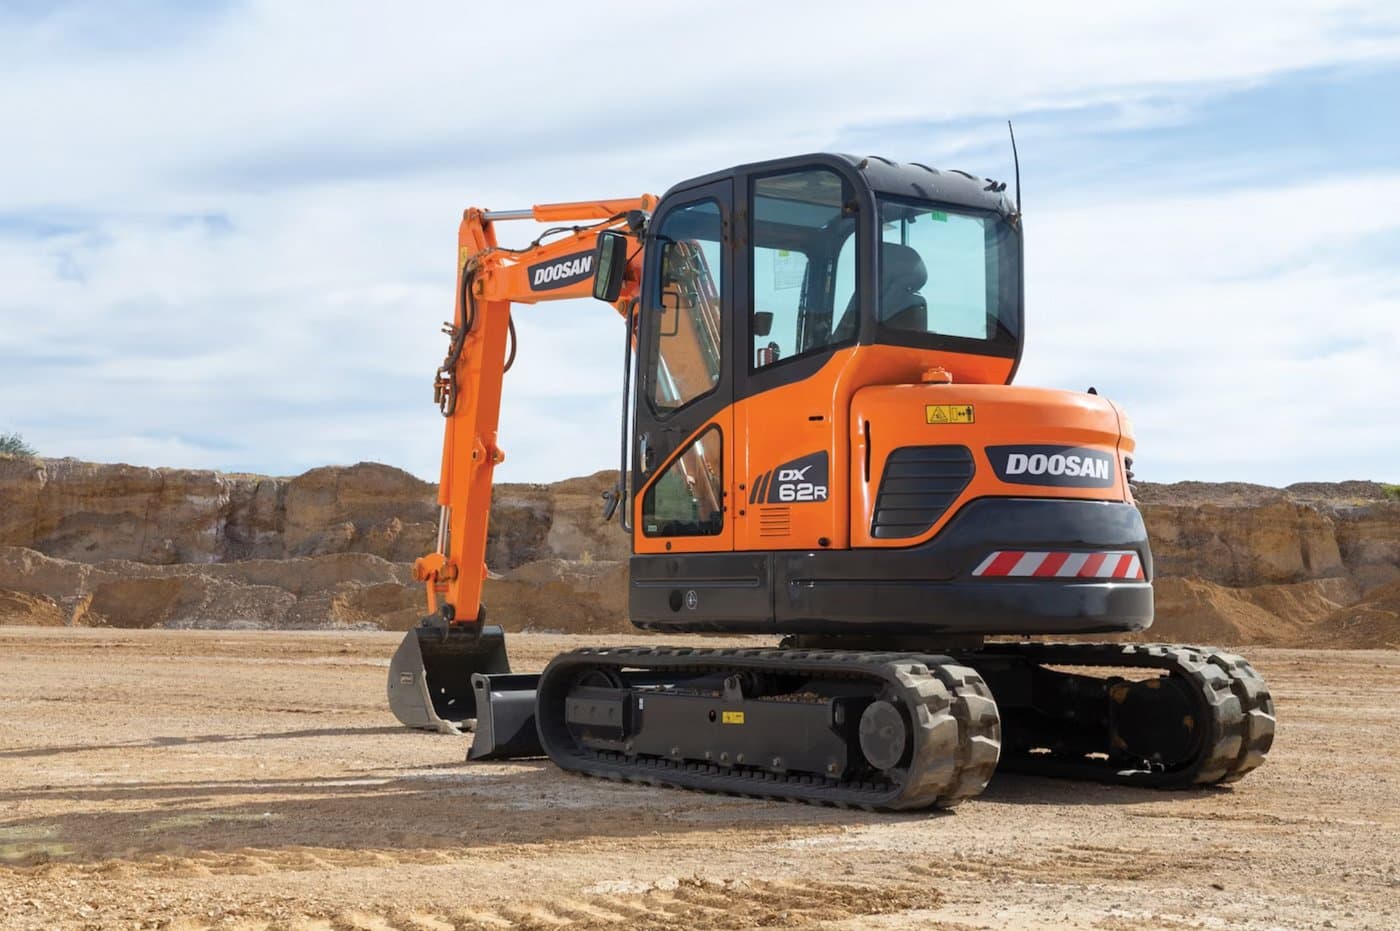 6.25 tonne Doosan big large excavator for work on construction sites plant hire West Yorkshire Cleckheaton